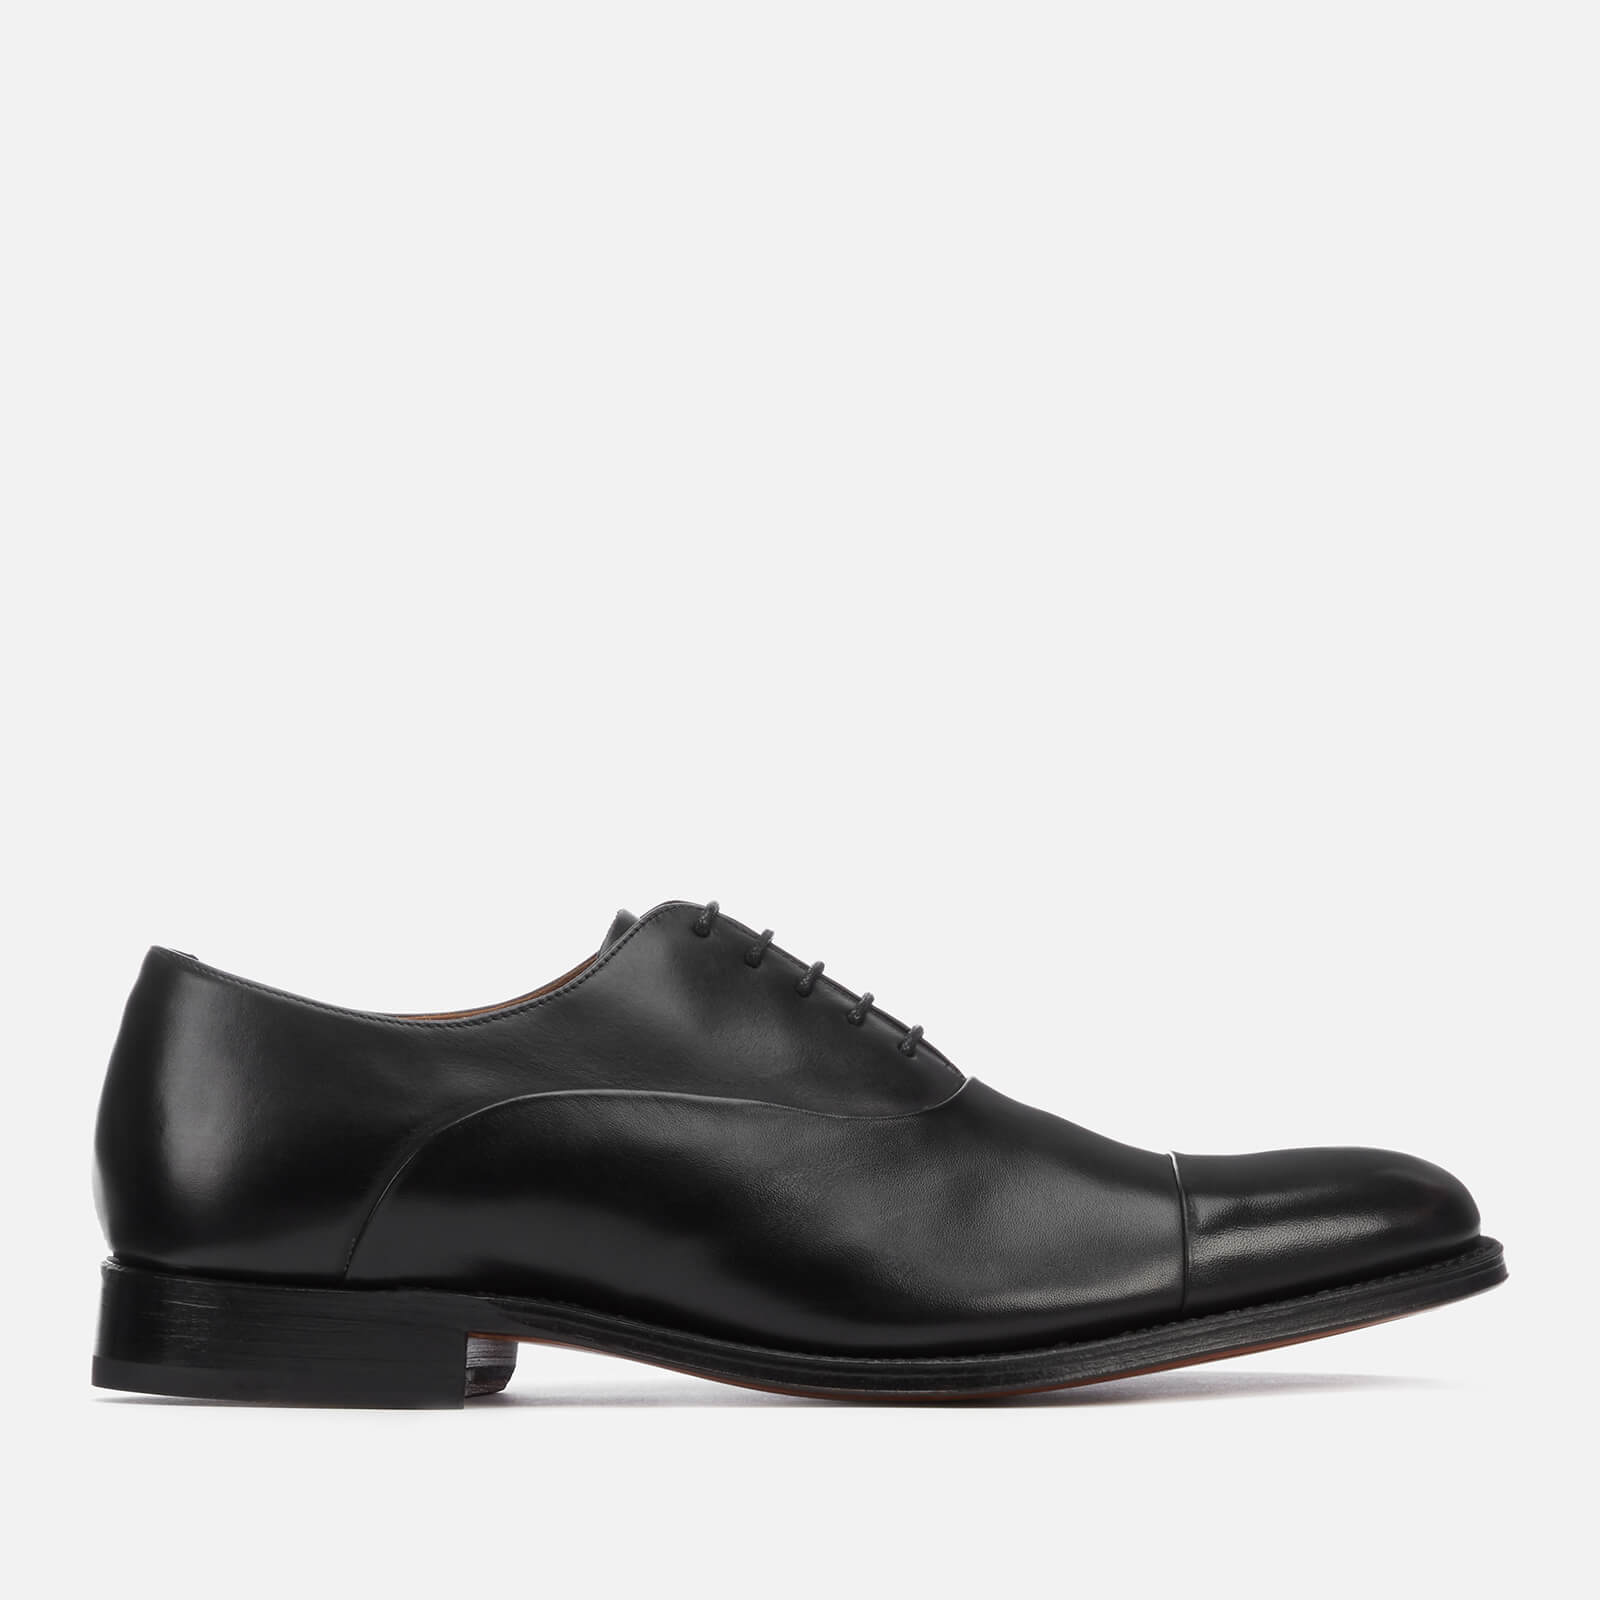 Grenson Men's Bert Leather Toe Cap Oxford Shoes - Black - UK 8